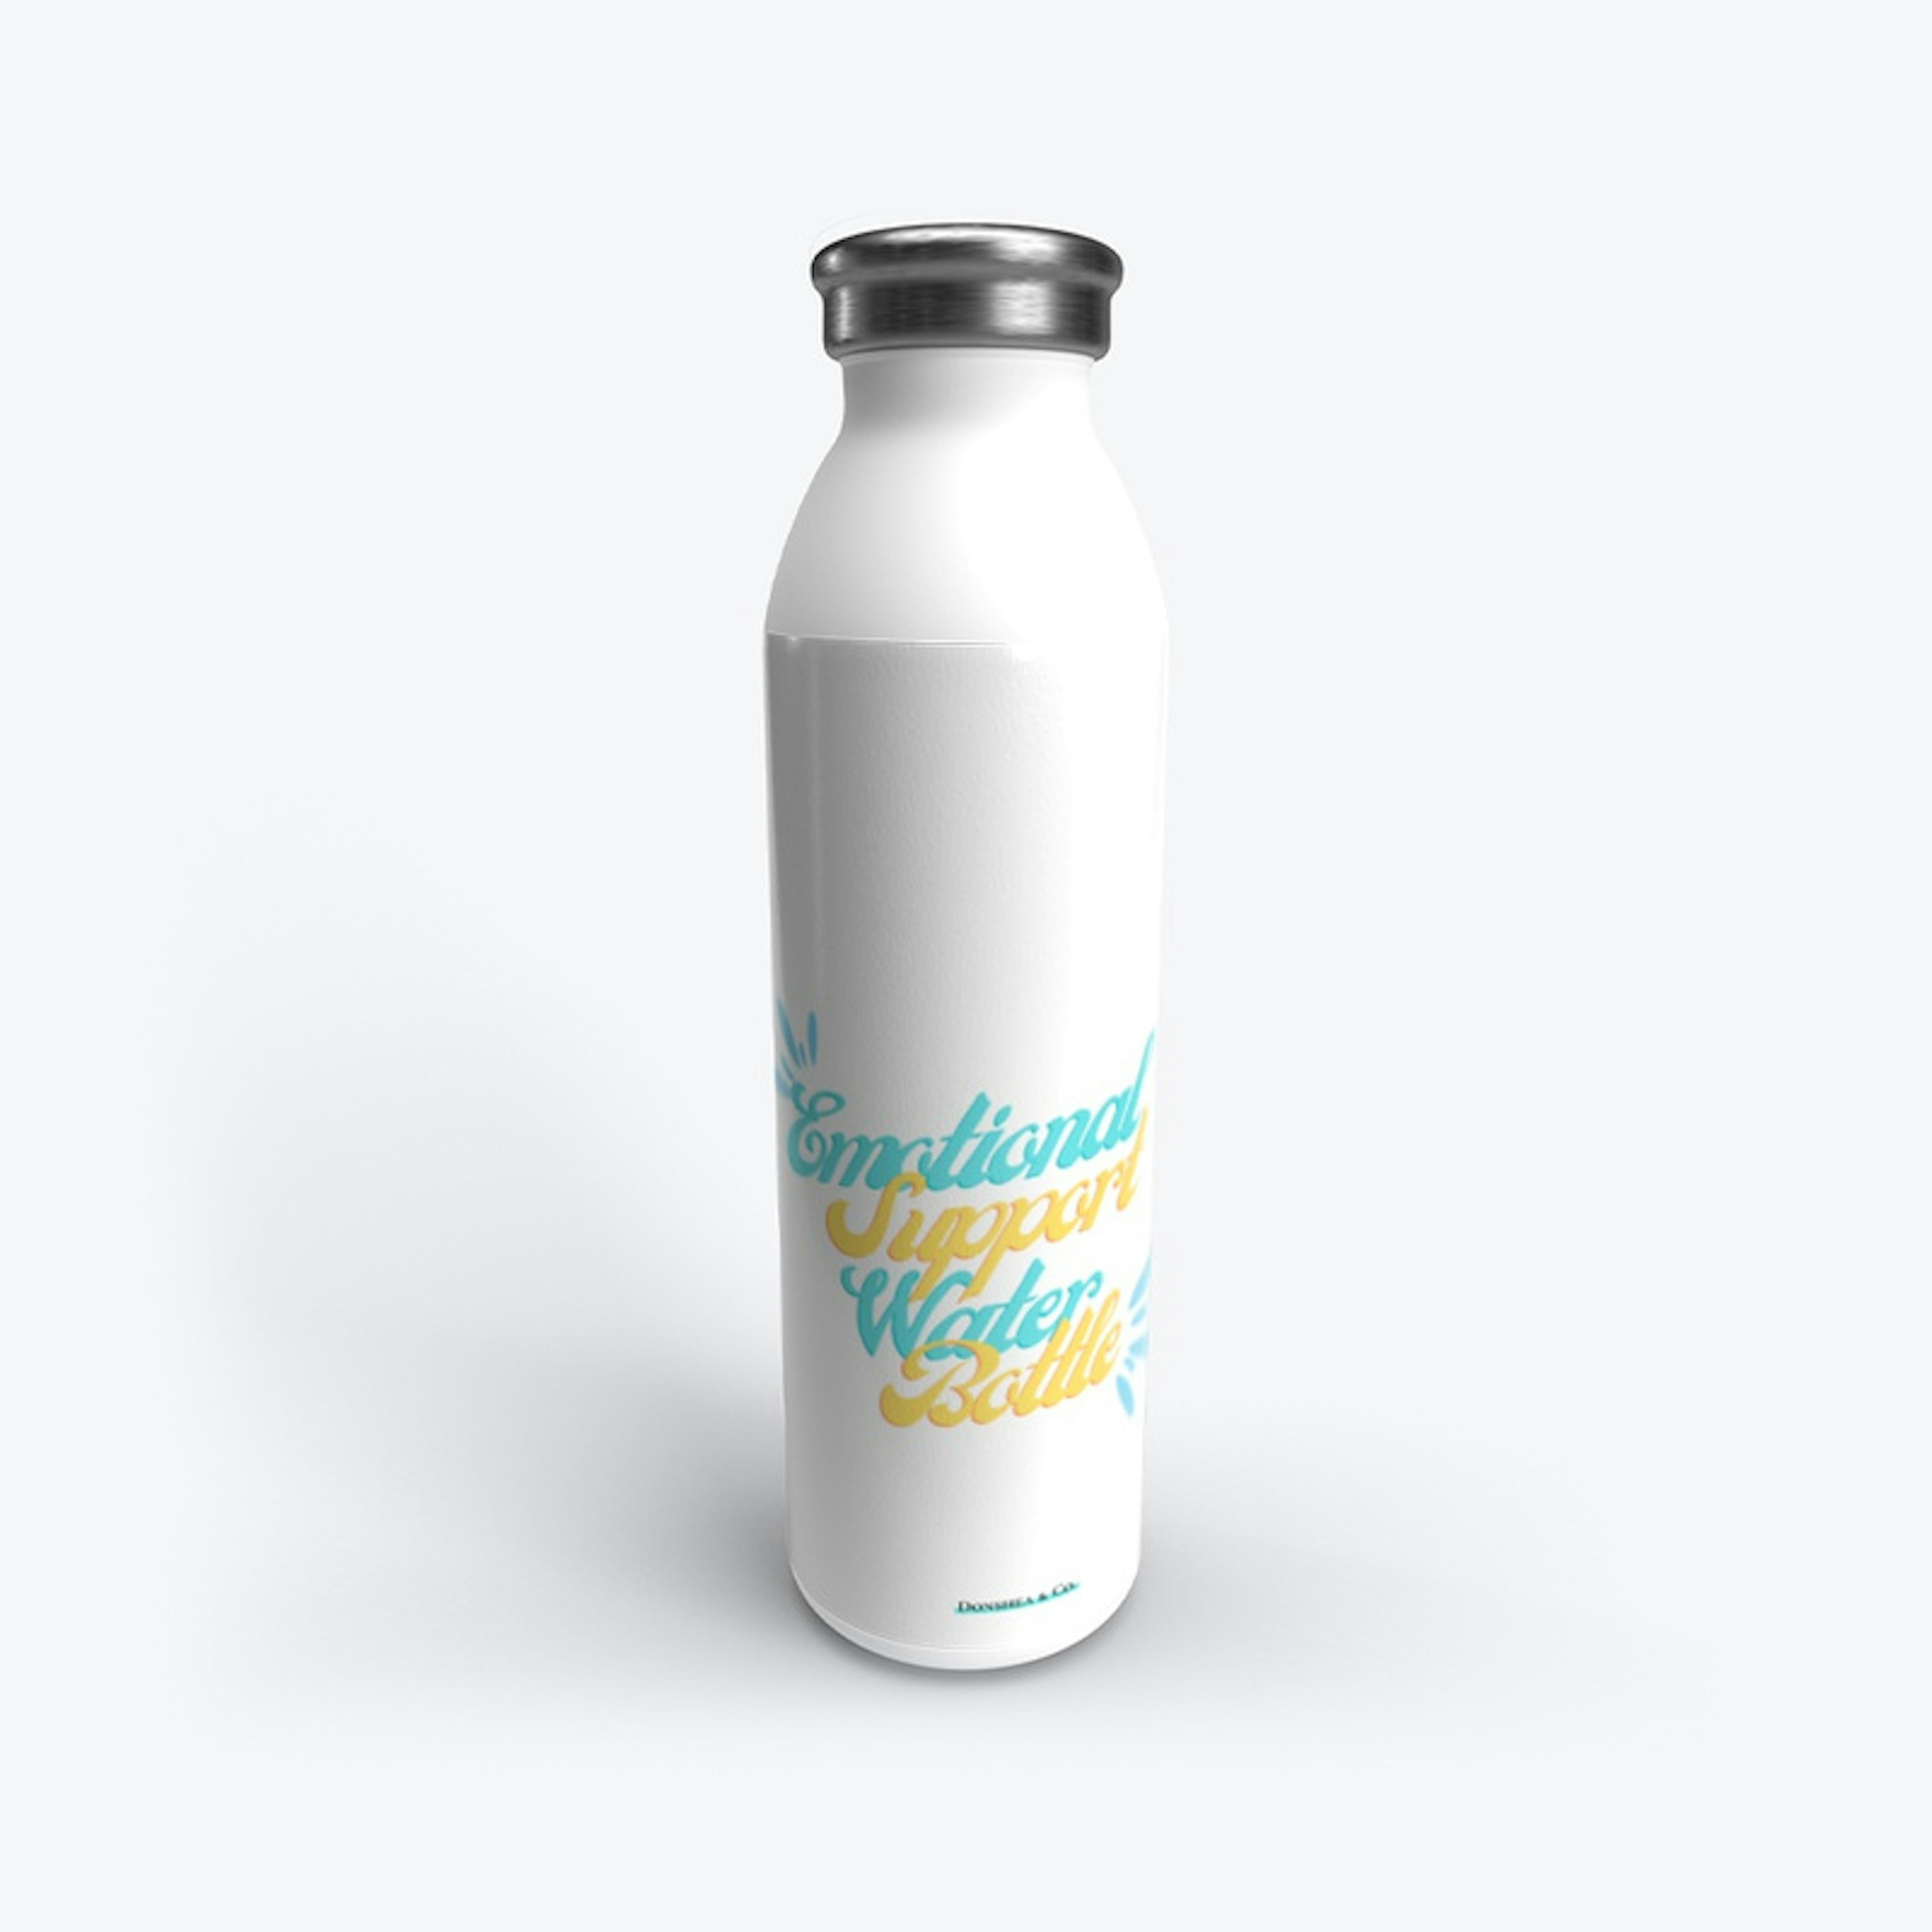 Emotional support water bottle